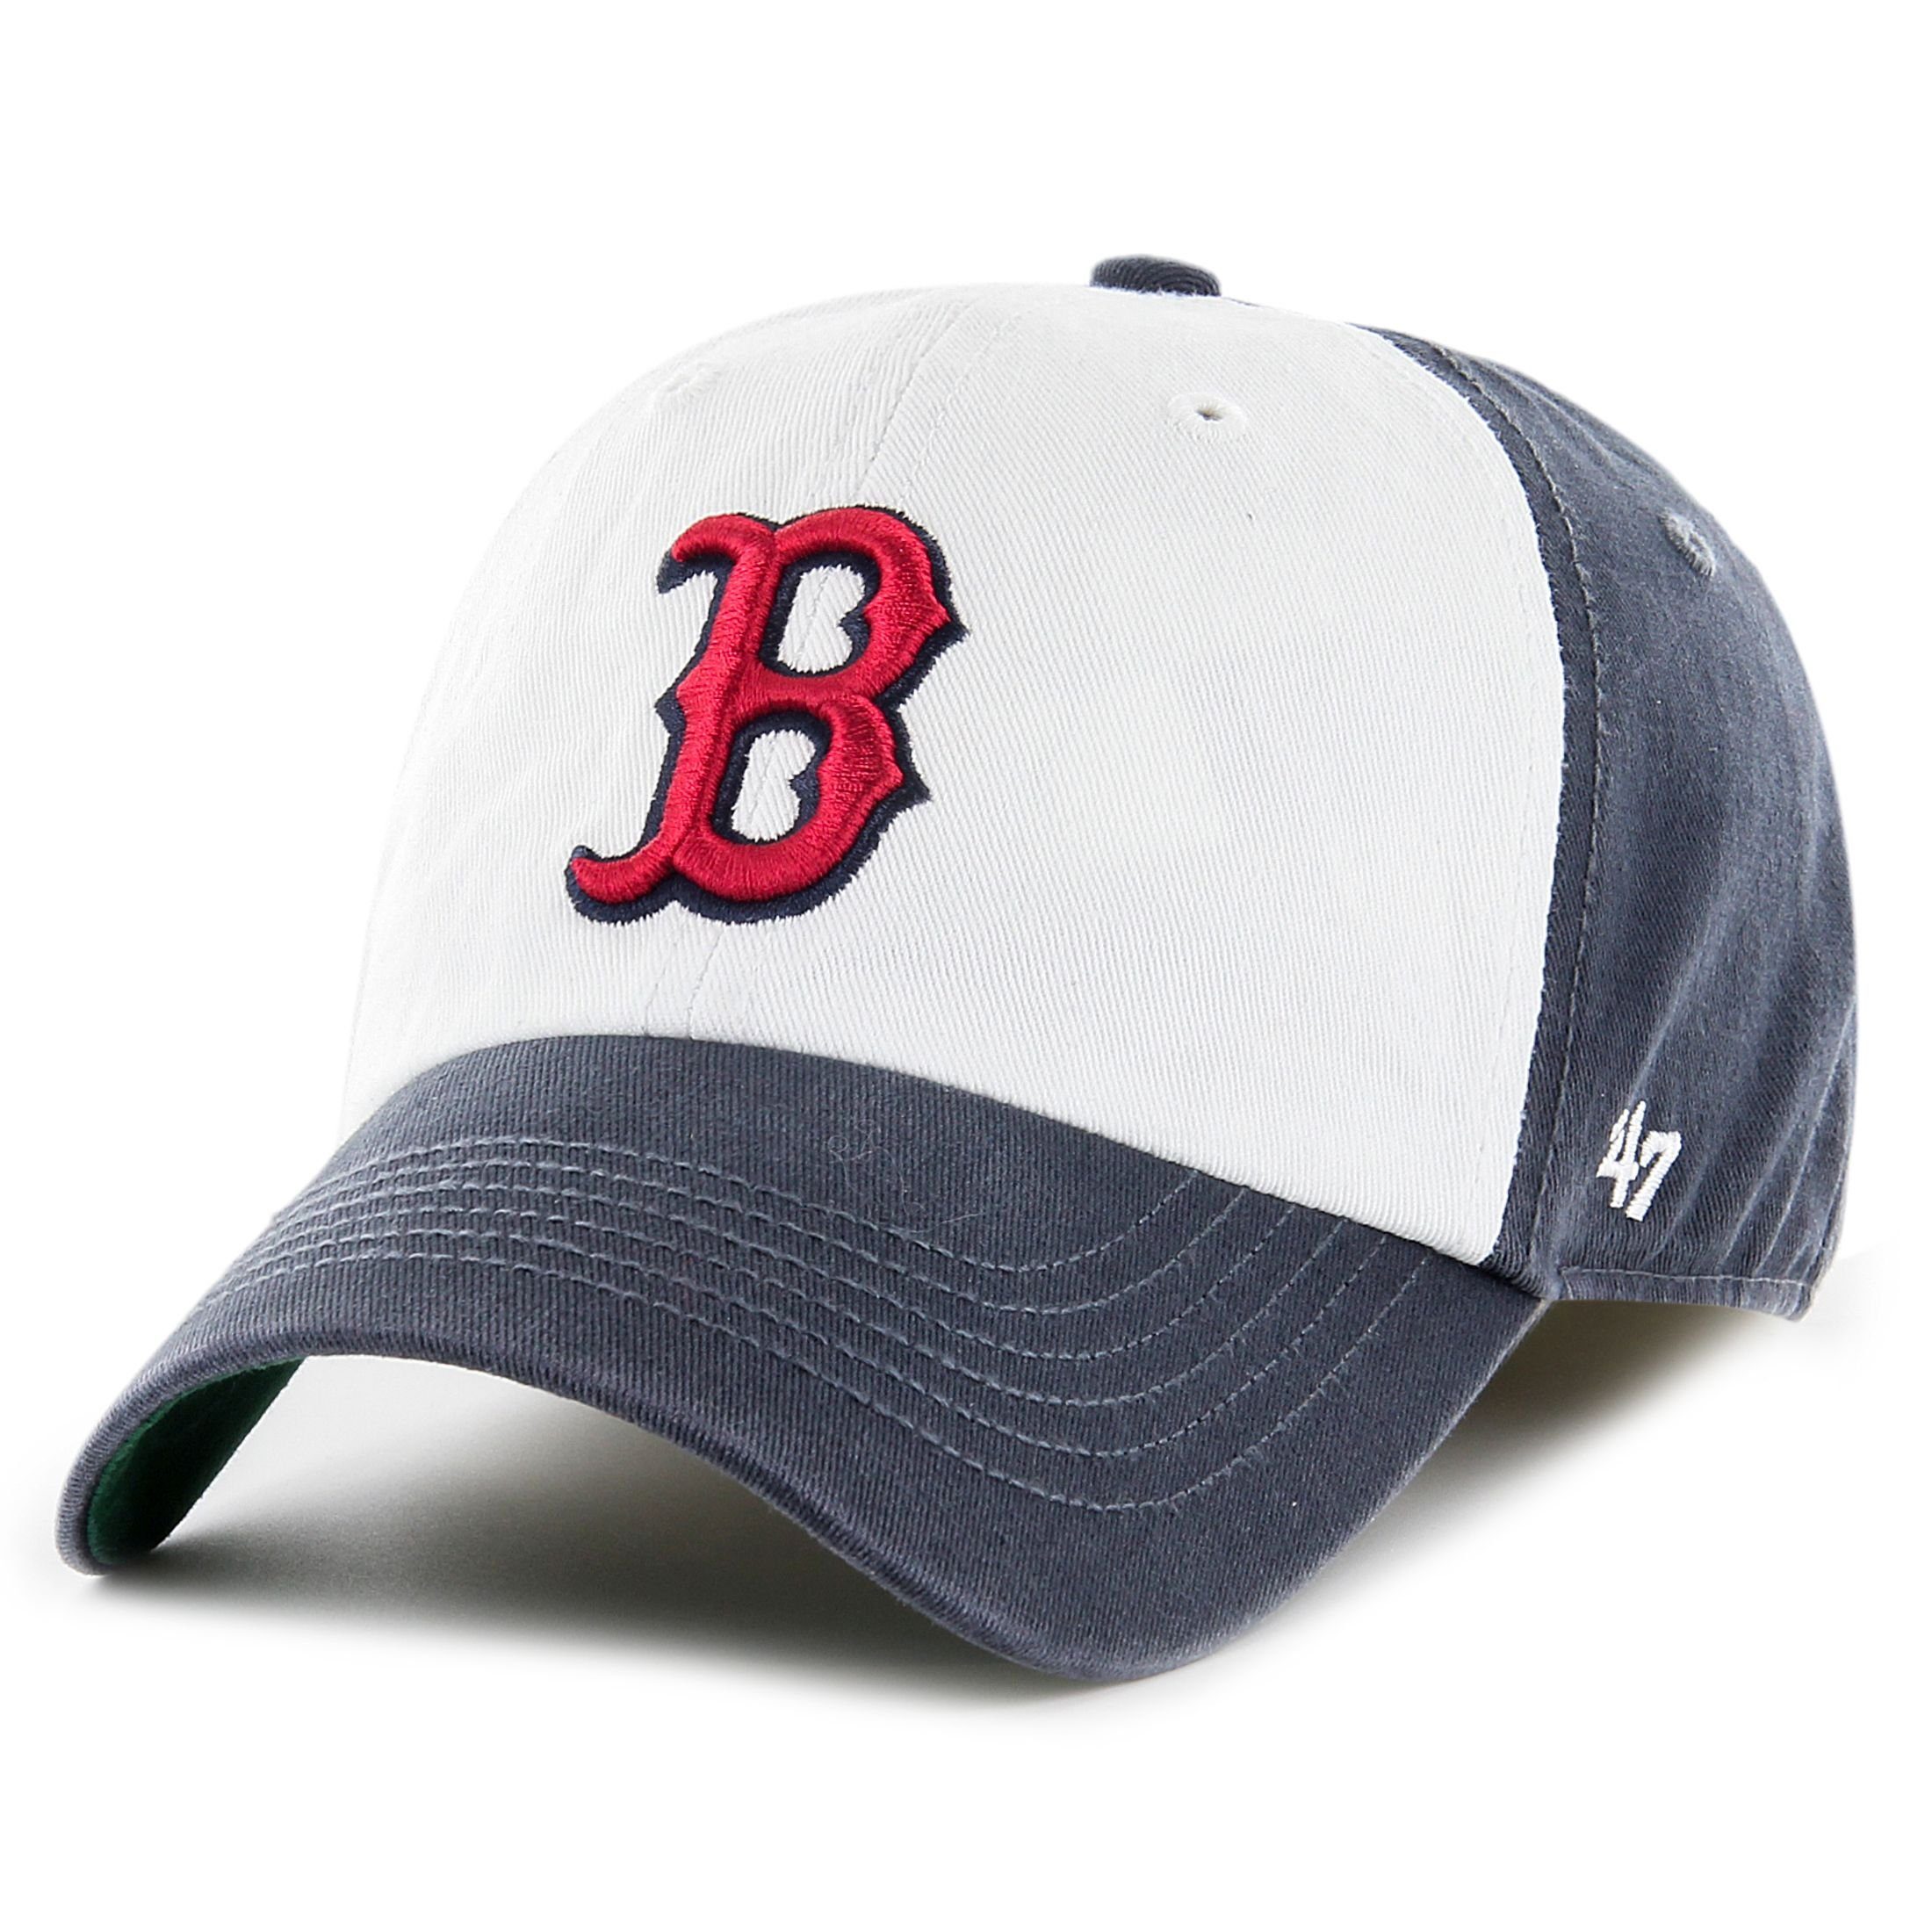 '47 Brand Flex Cap Franchise FRESHMAN Boston Red Sox